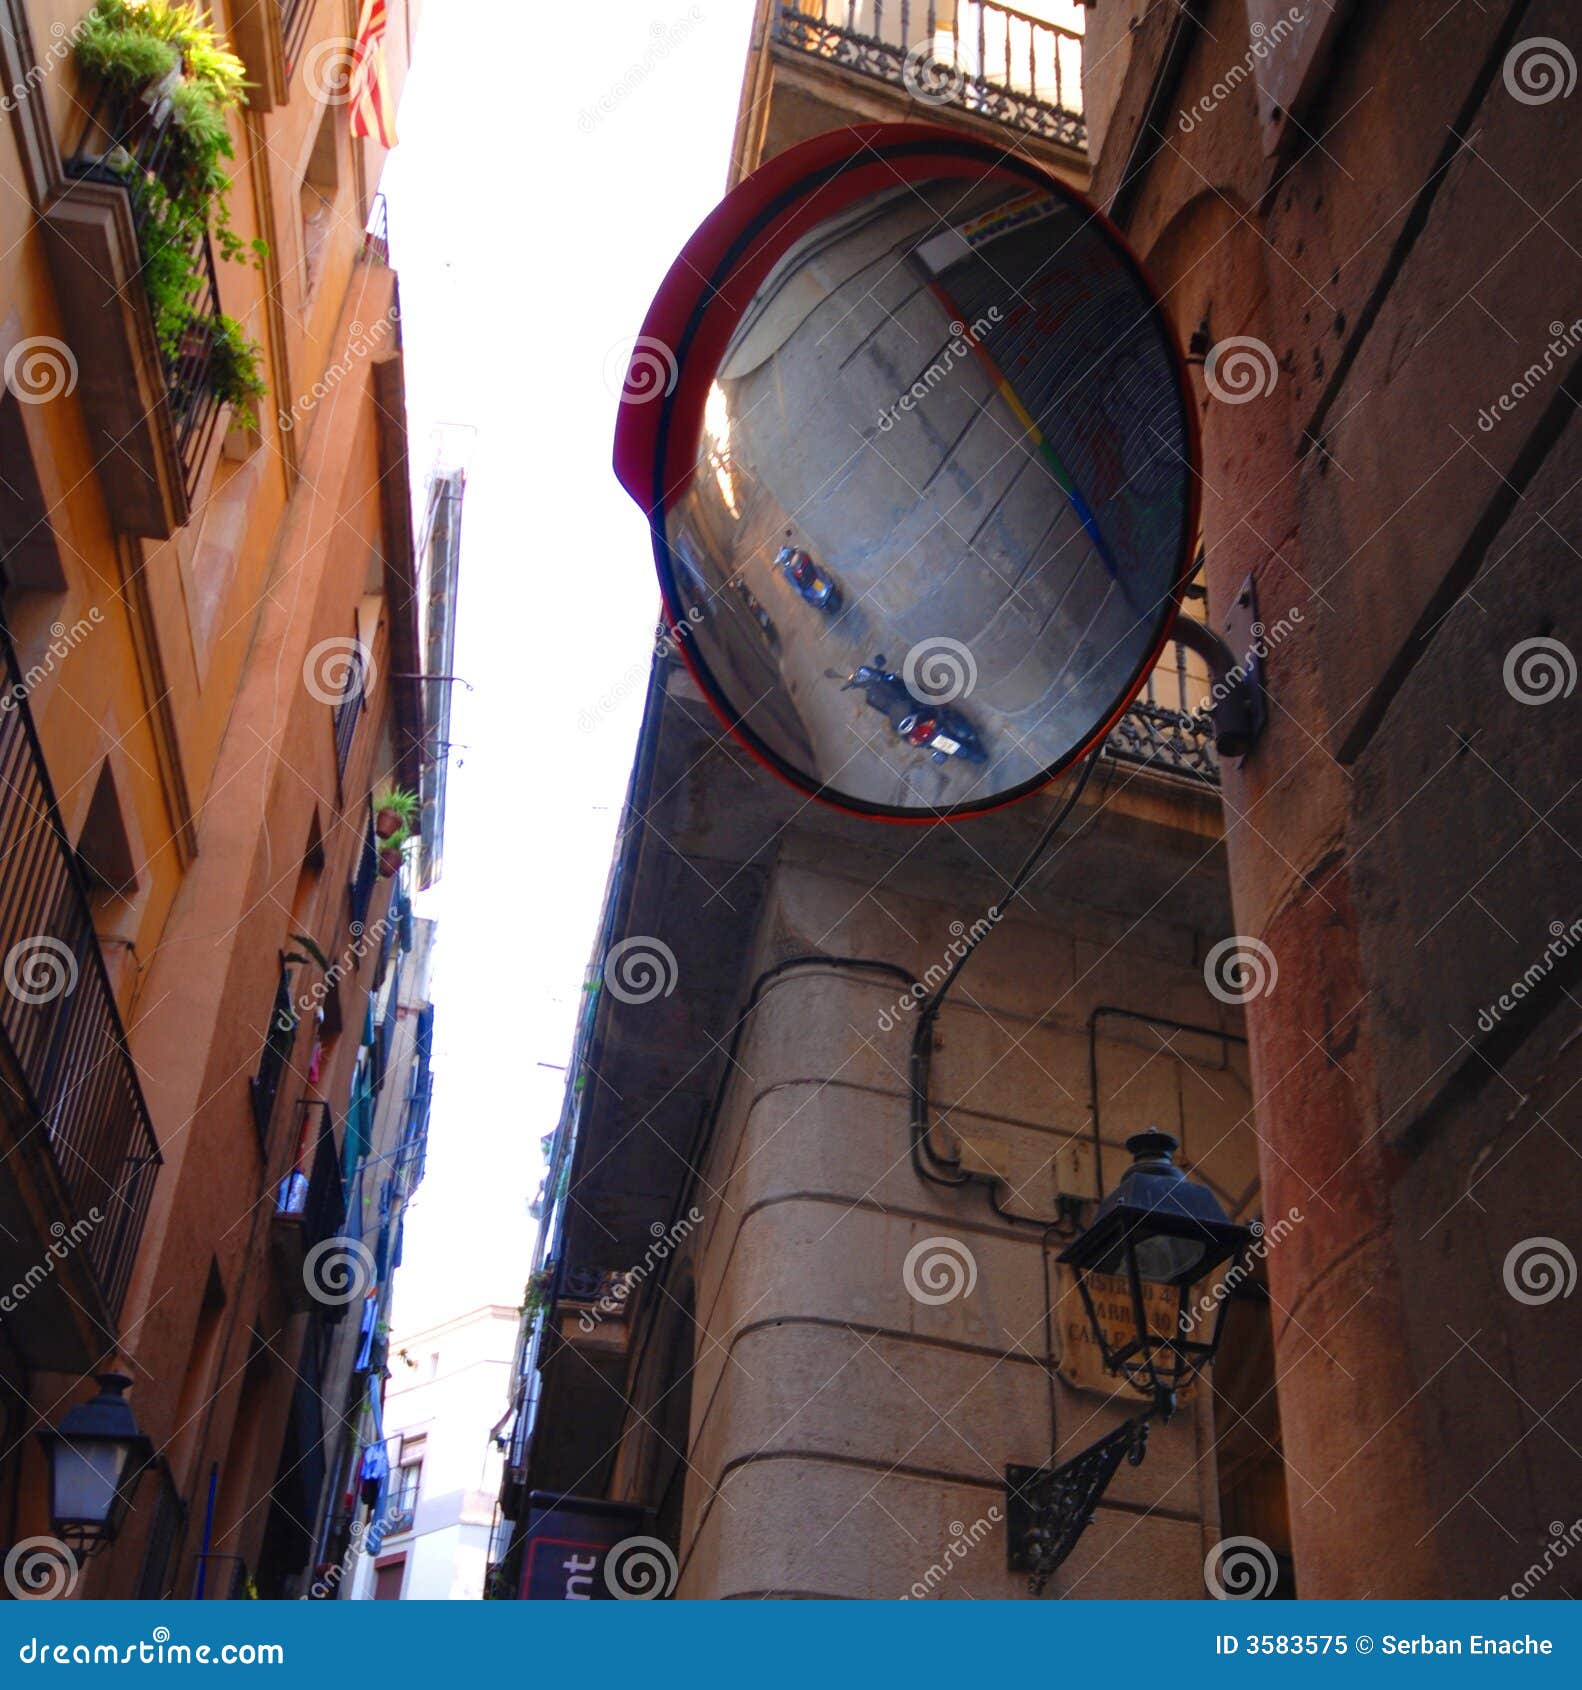 alleyway between buildings